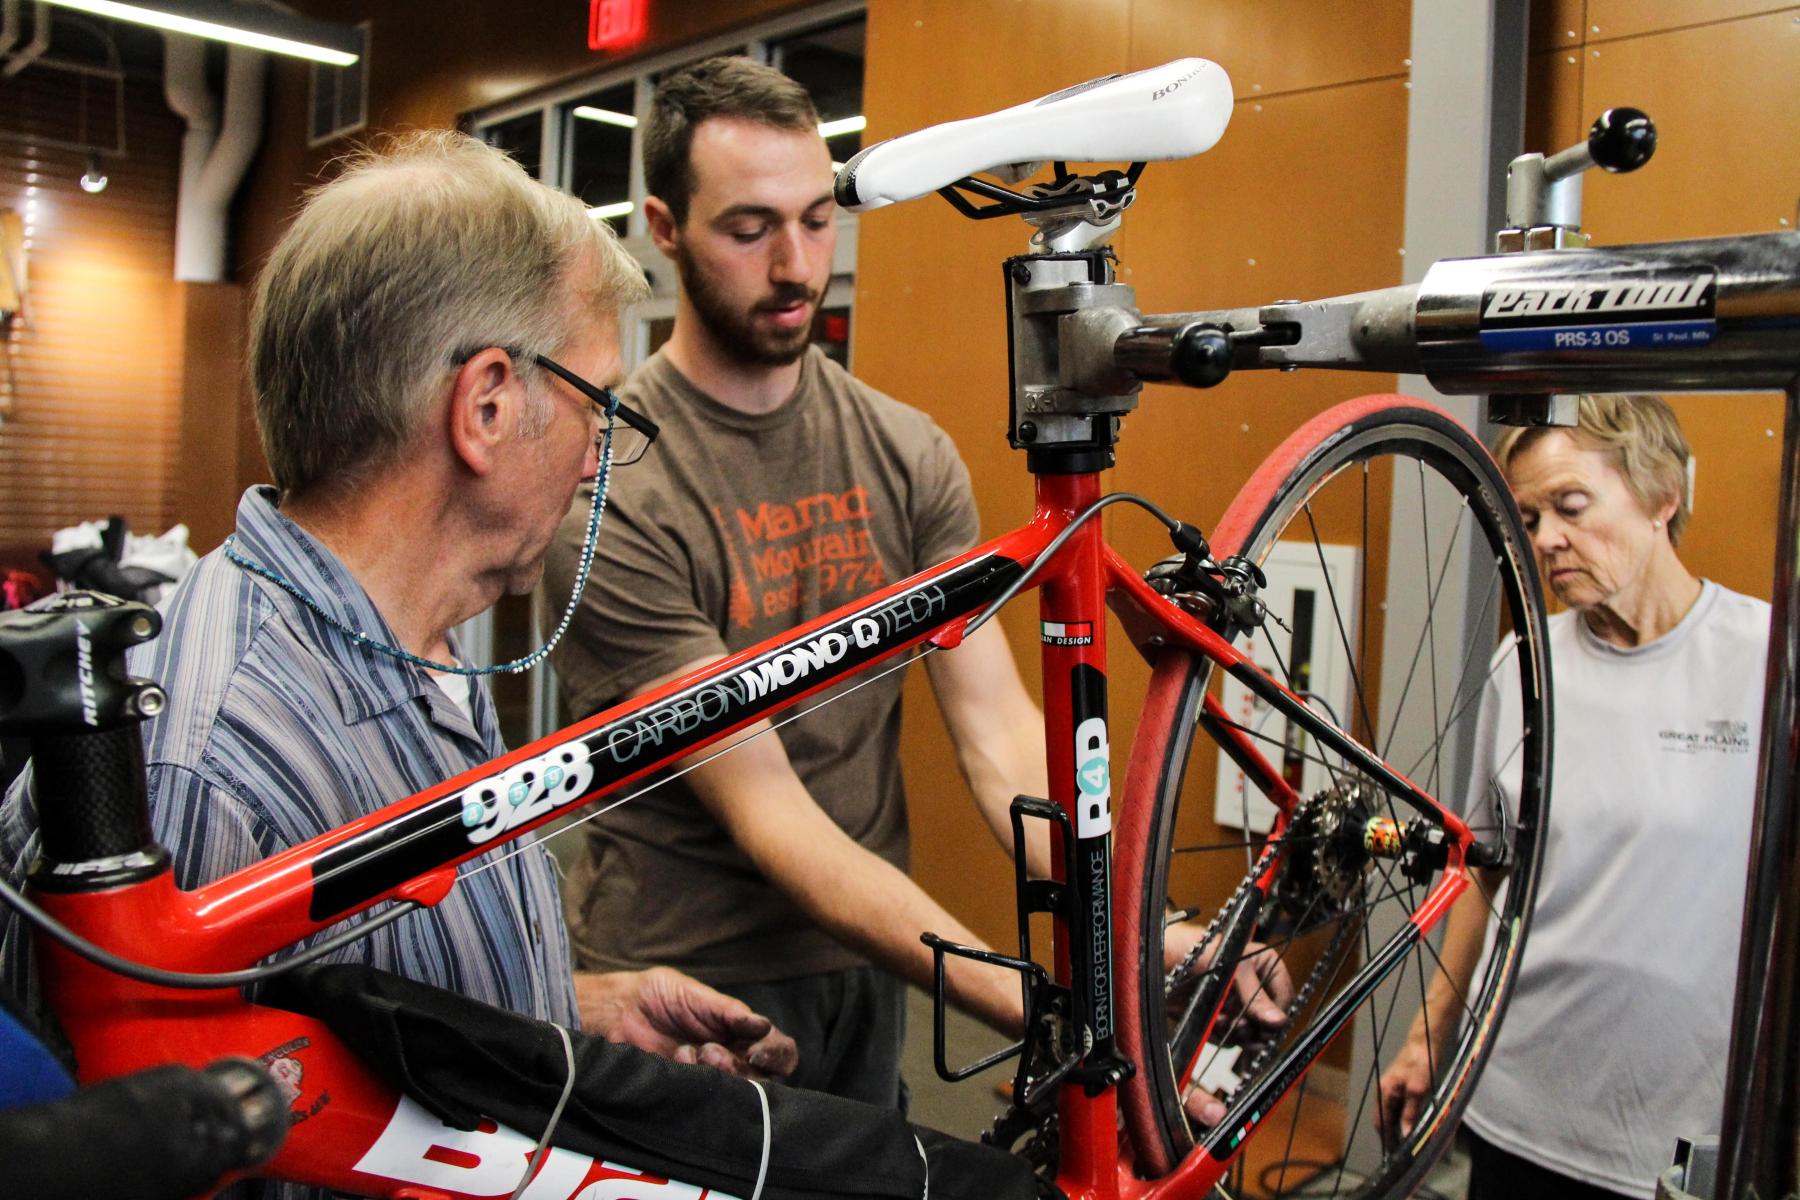 Bike Shop staff members demonstrates proper bike maintenance